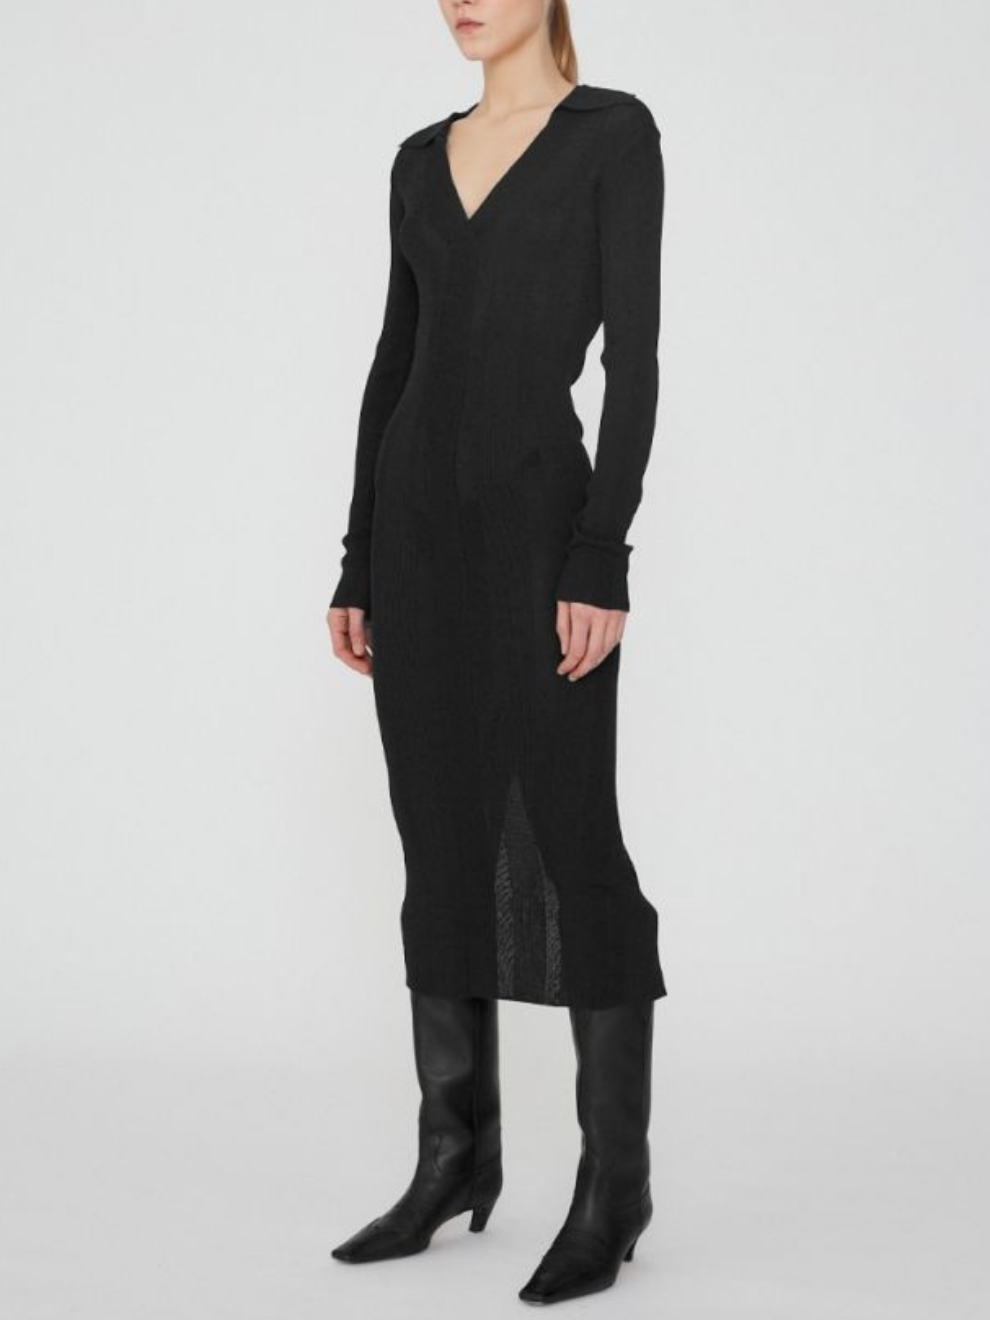 REMAIN Birger Christensen Joy knit Long Sleeve Dress in black